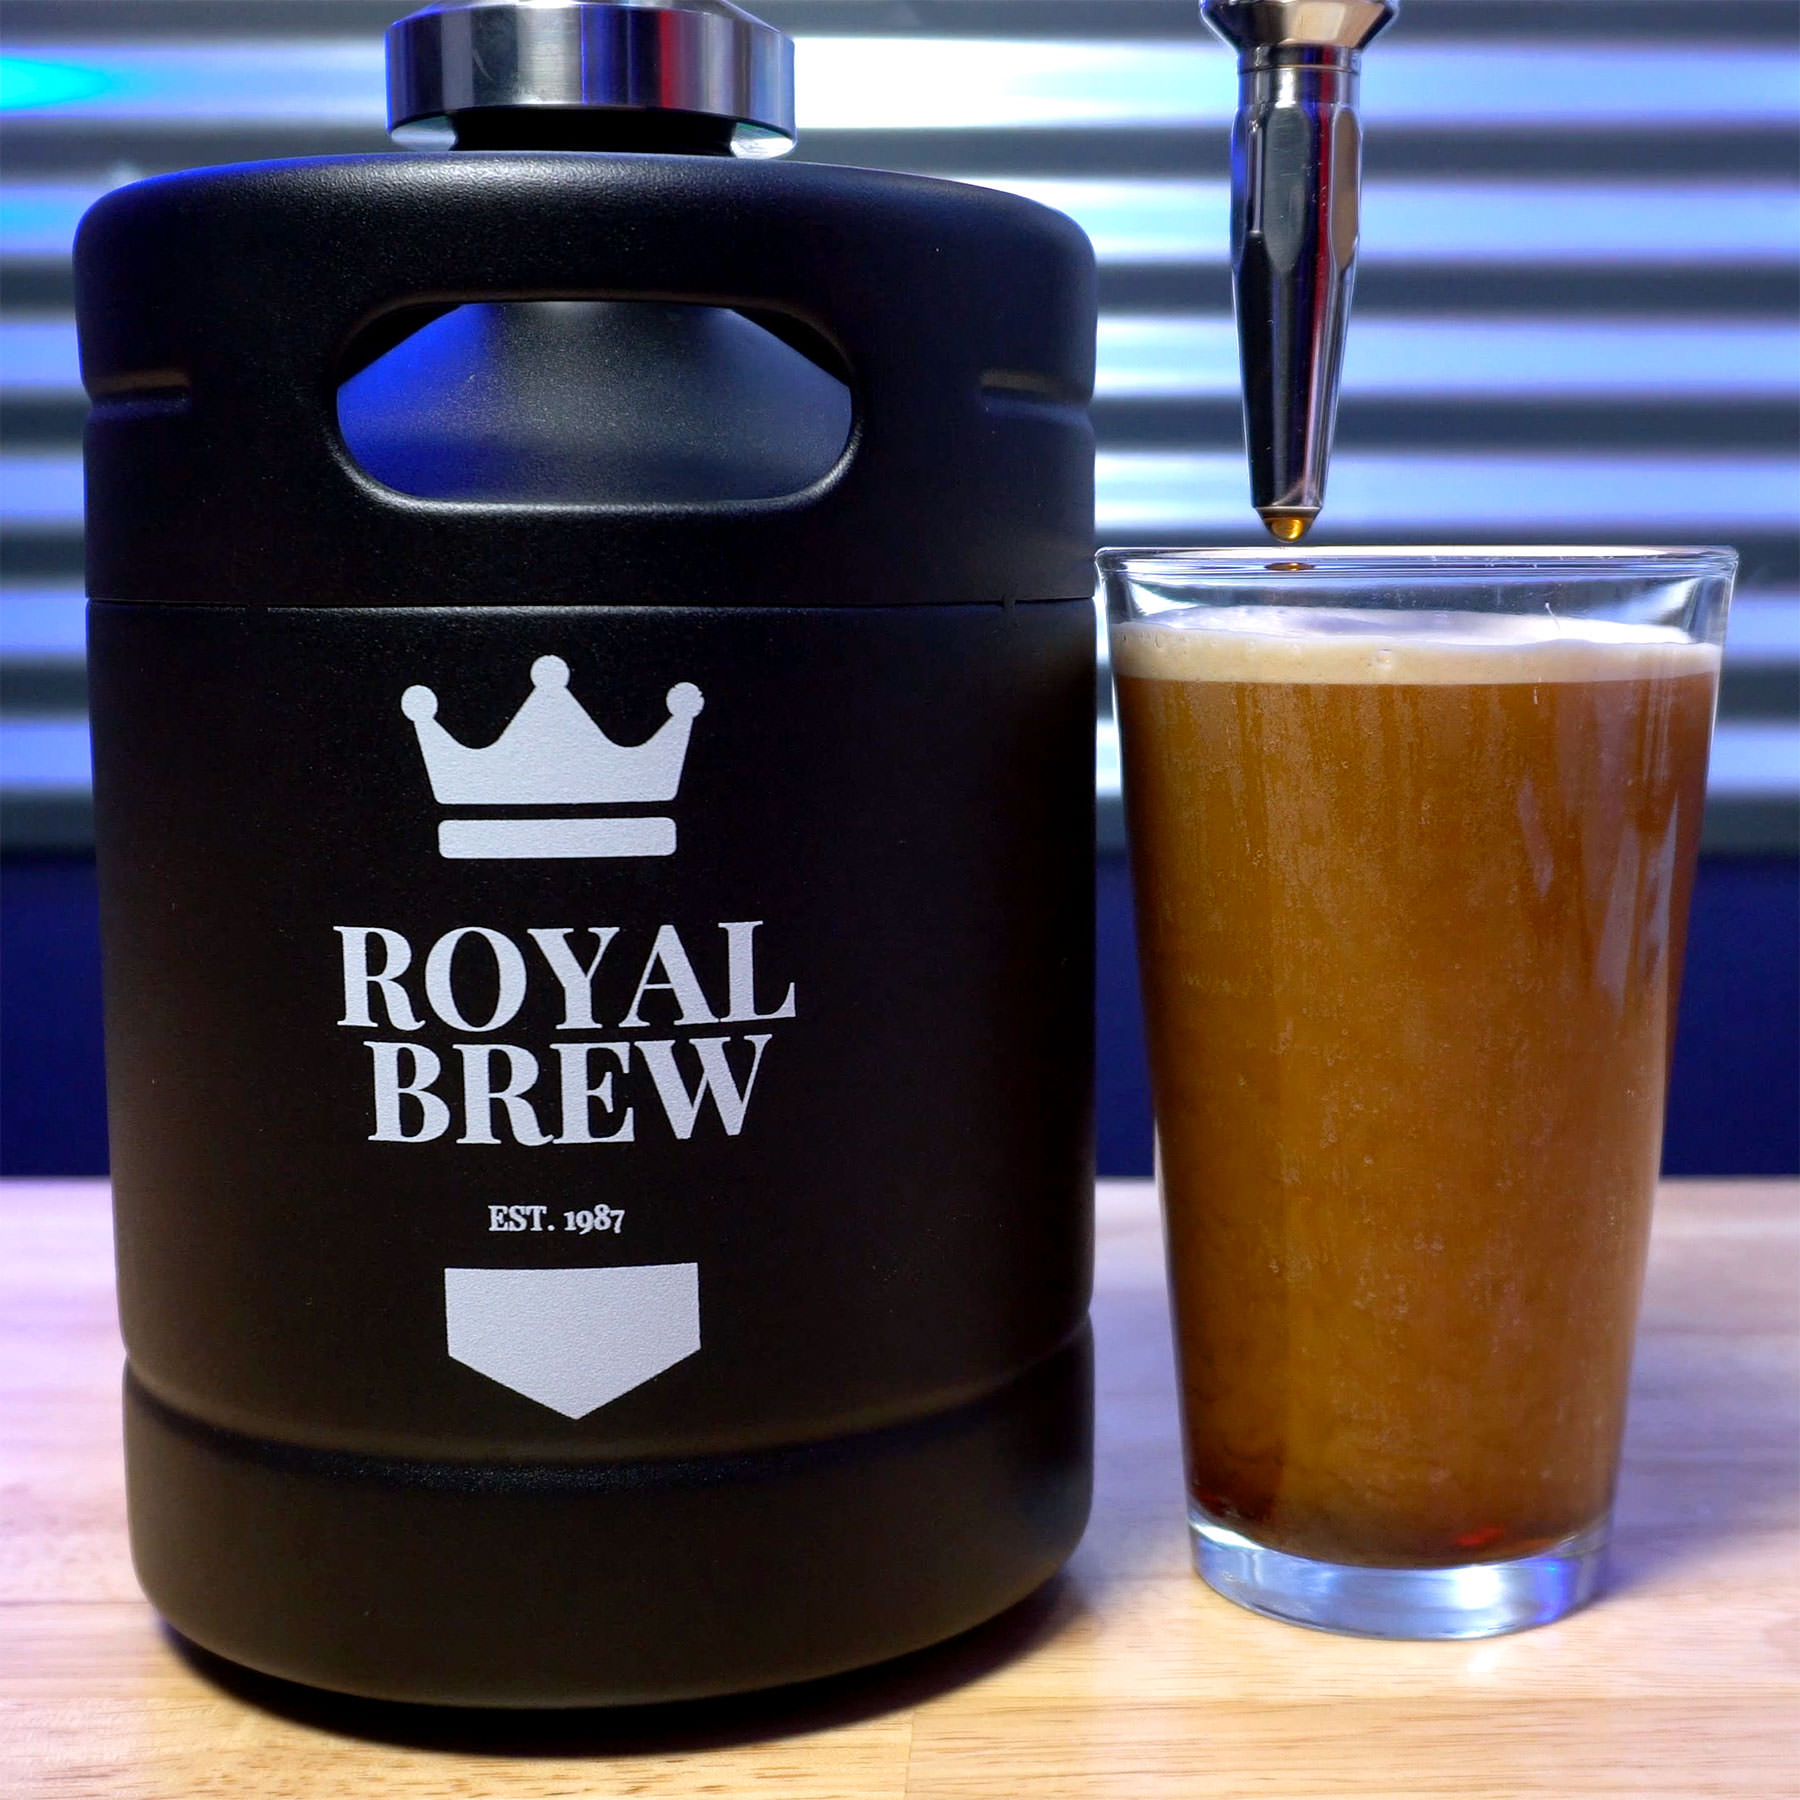 ROYAL BREW NITRO COFFEE MAKER